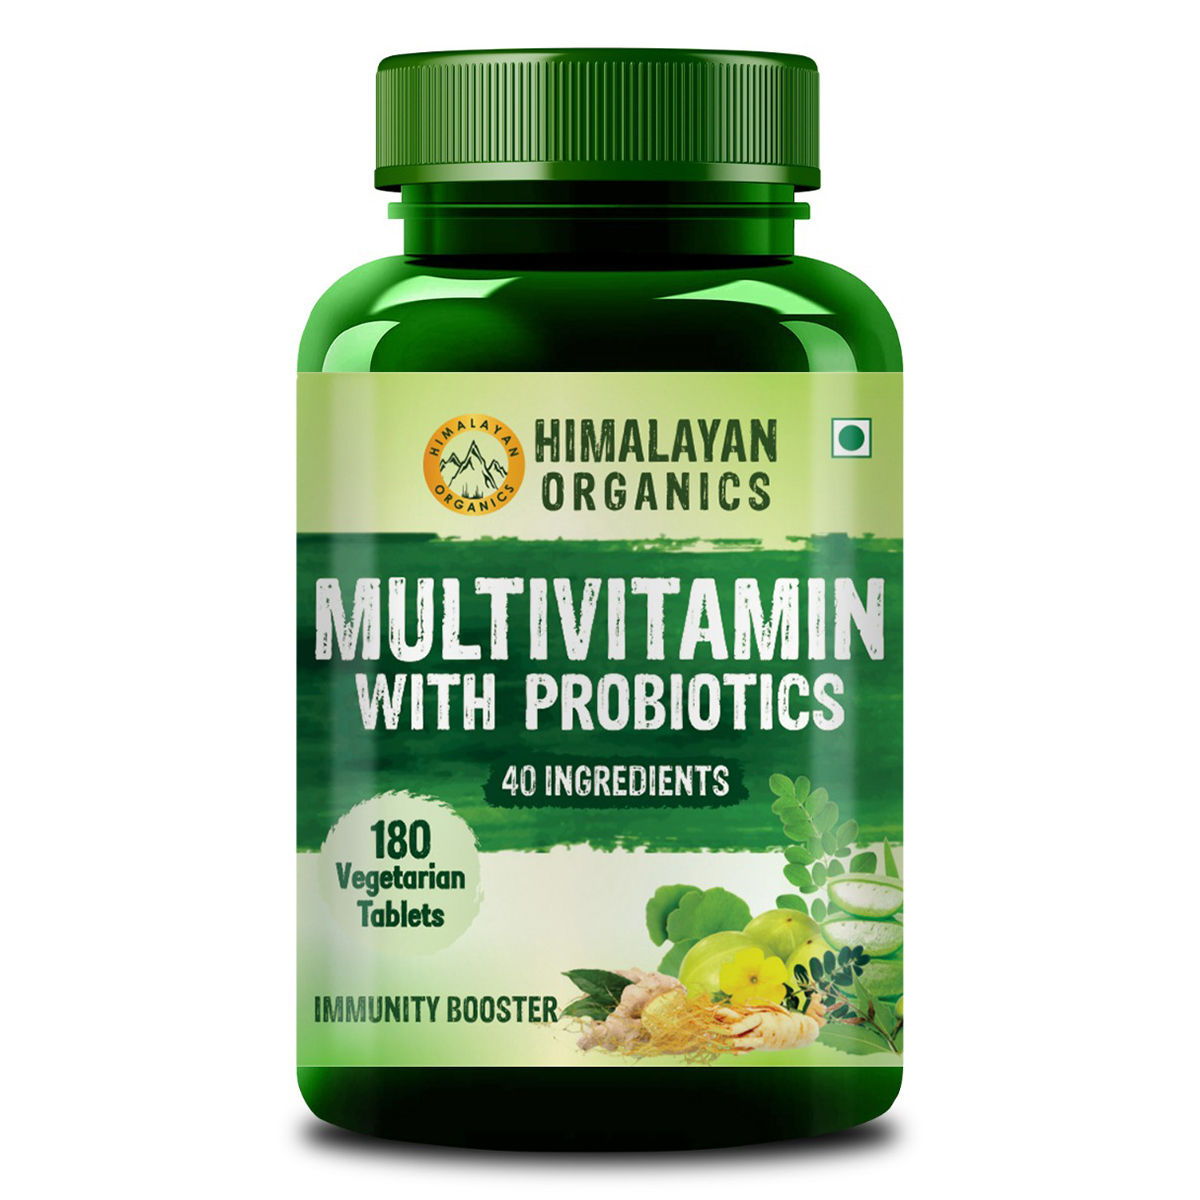 Buy Himalayan Organics Multivitamin with Probiotics, 180 Tablets Online